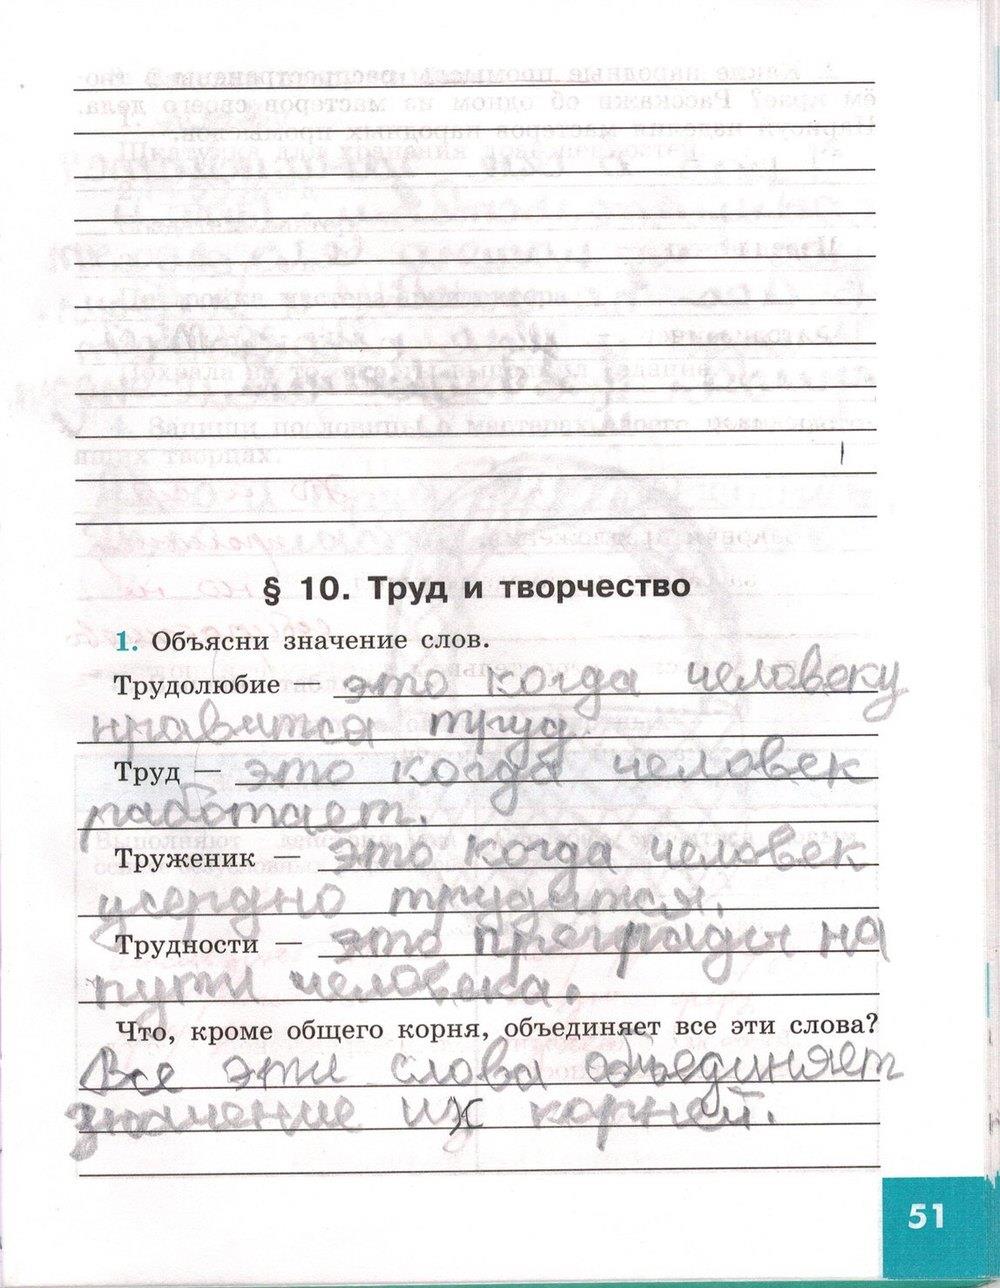 гдз 5 класс рабочая тетрадь страница 51 обществознание Иванова, Хотеенкова